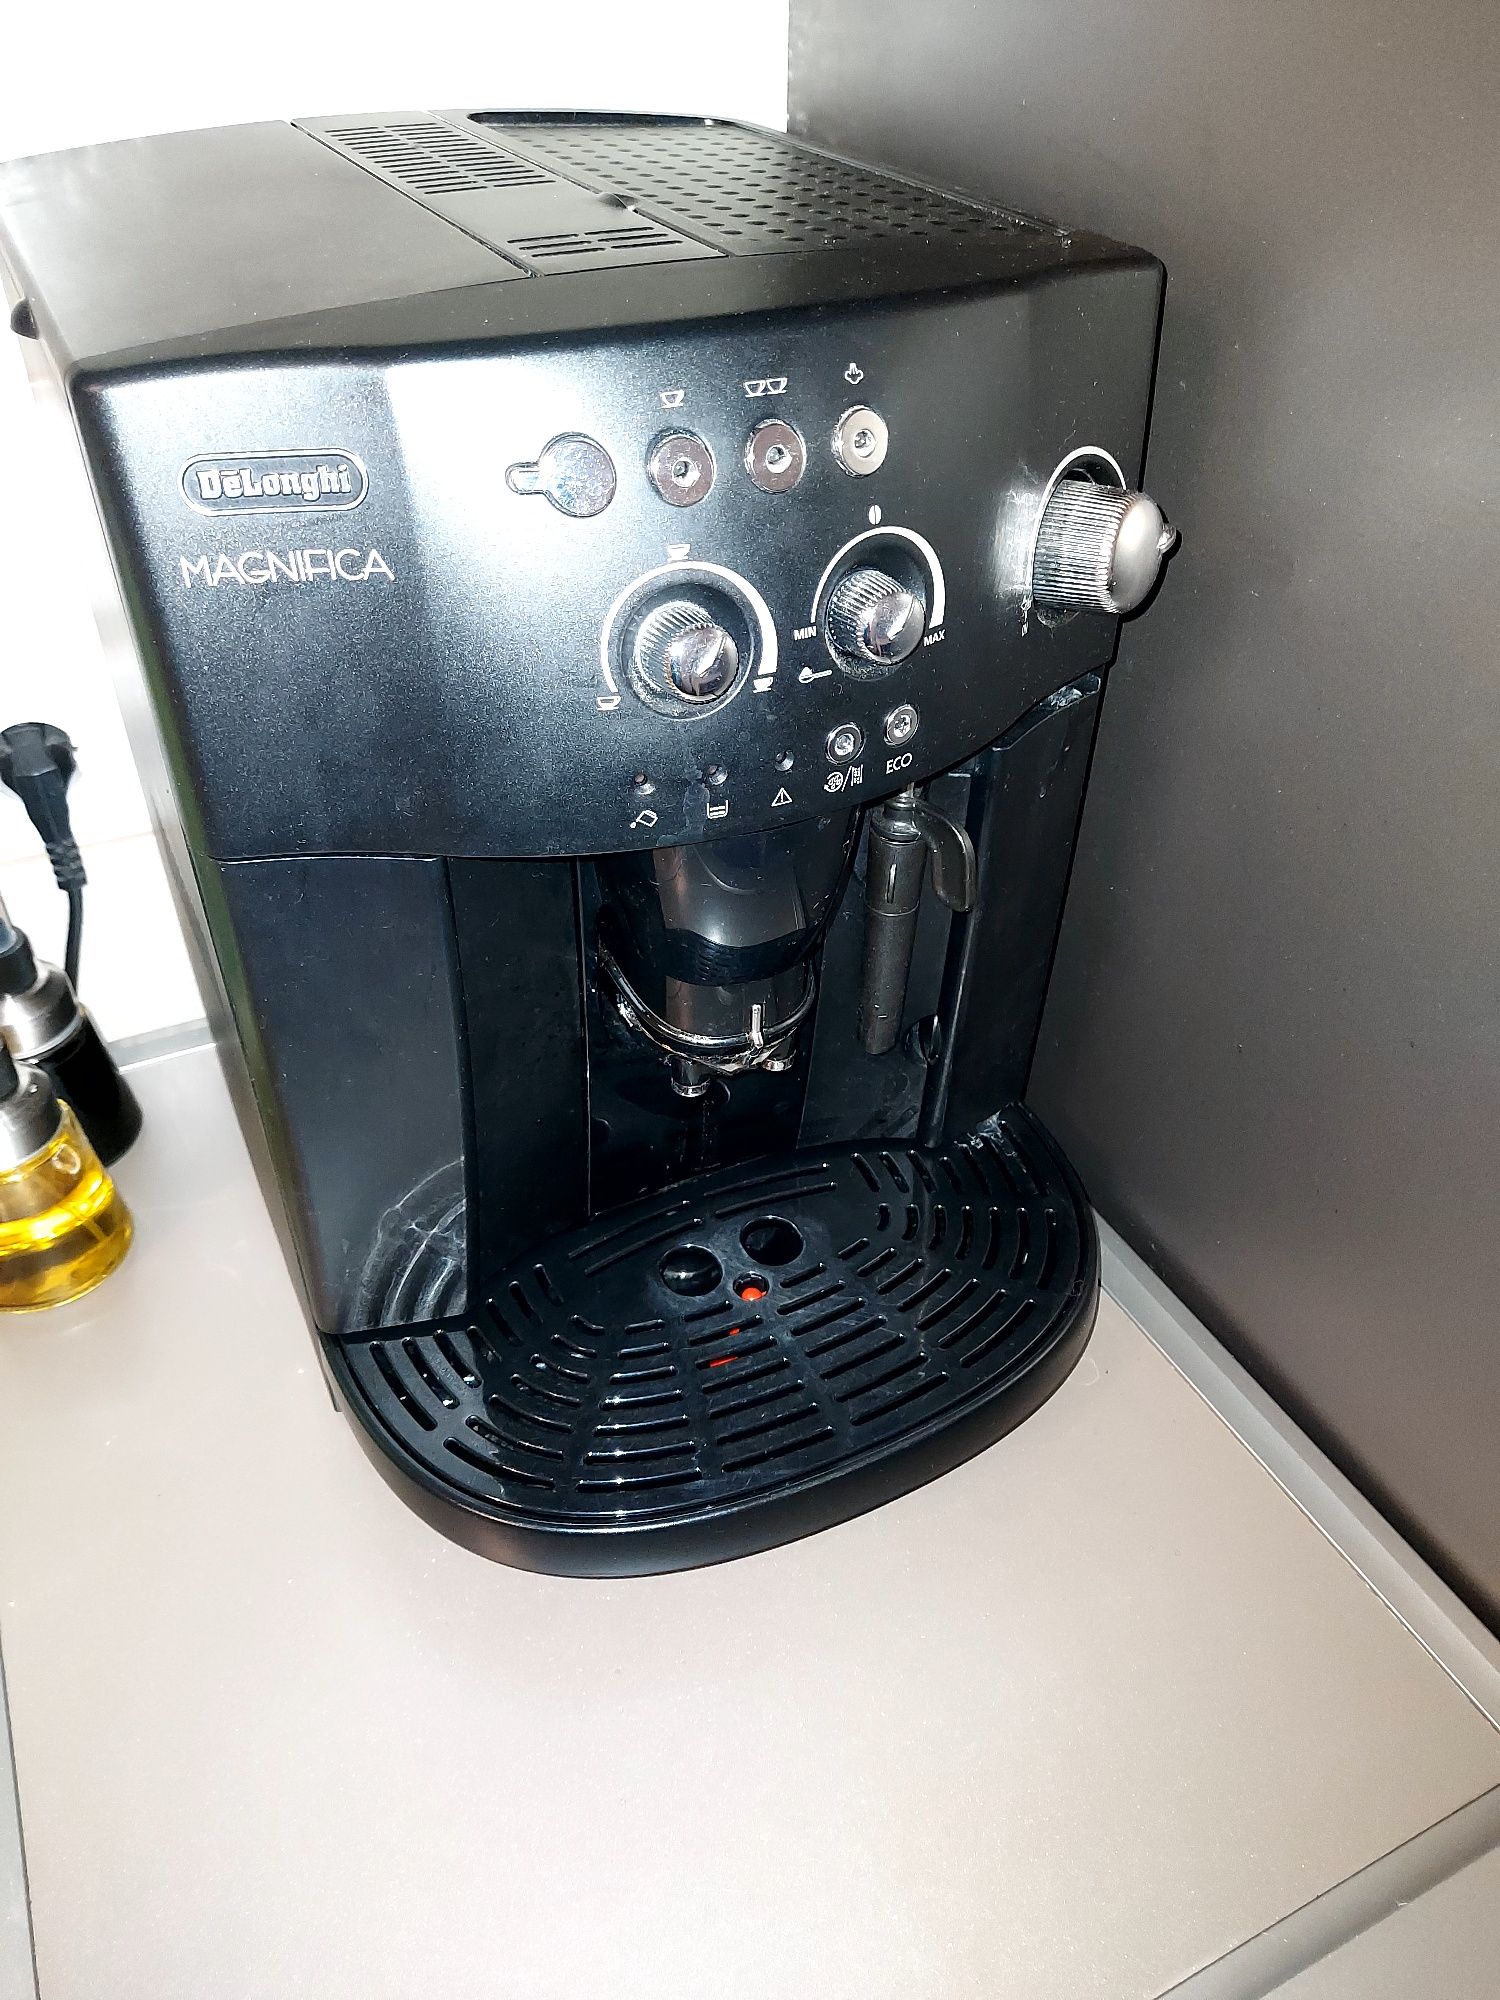 Espressor automat De'Longhi Caffe Magnifica